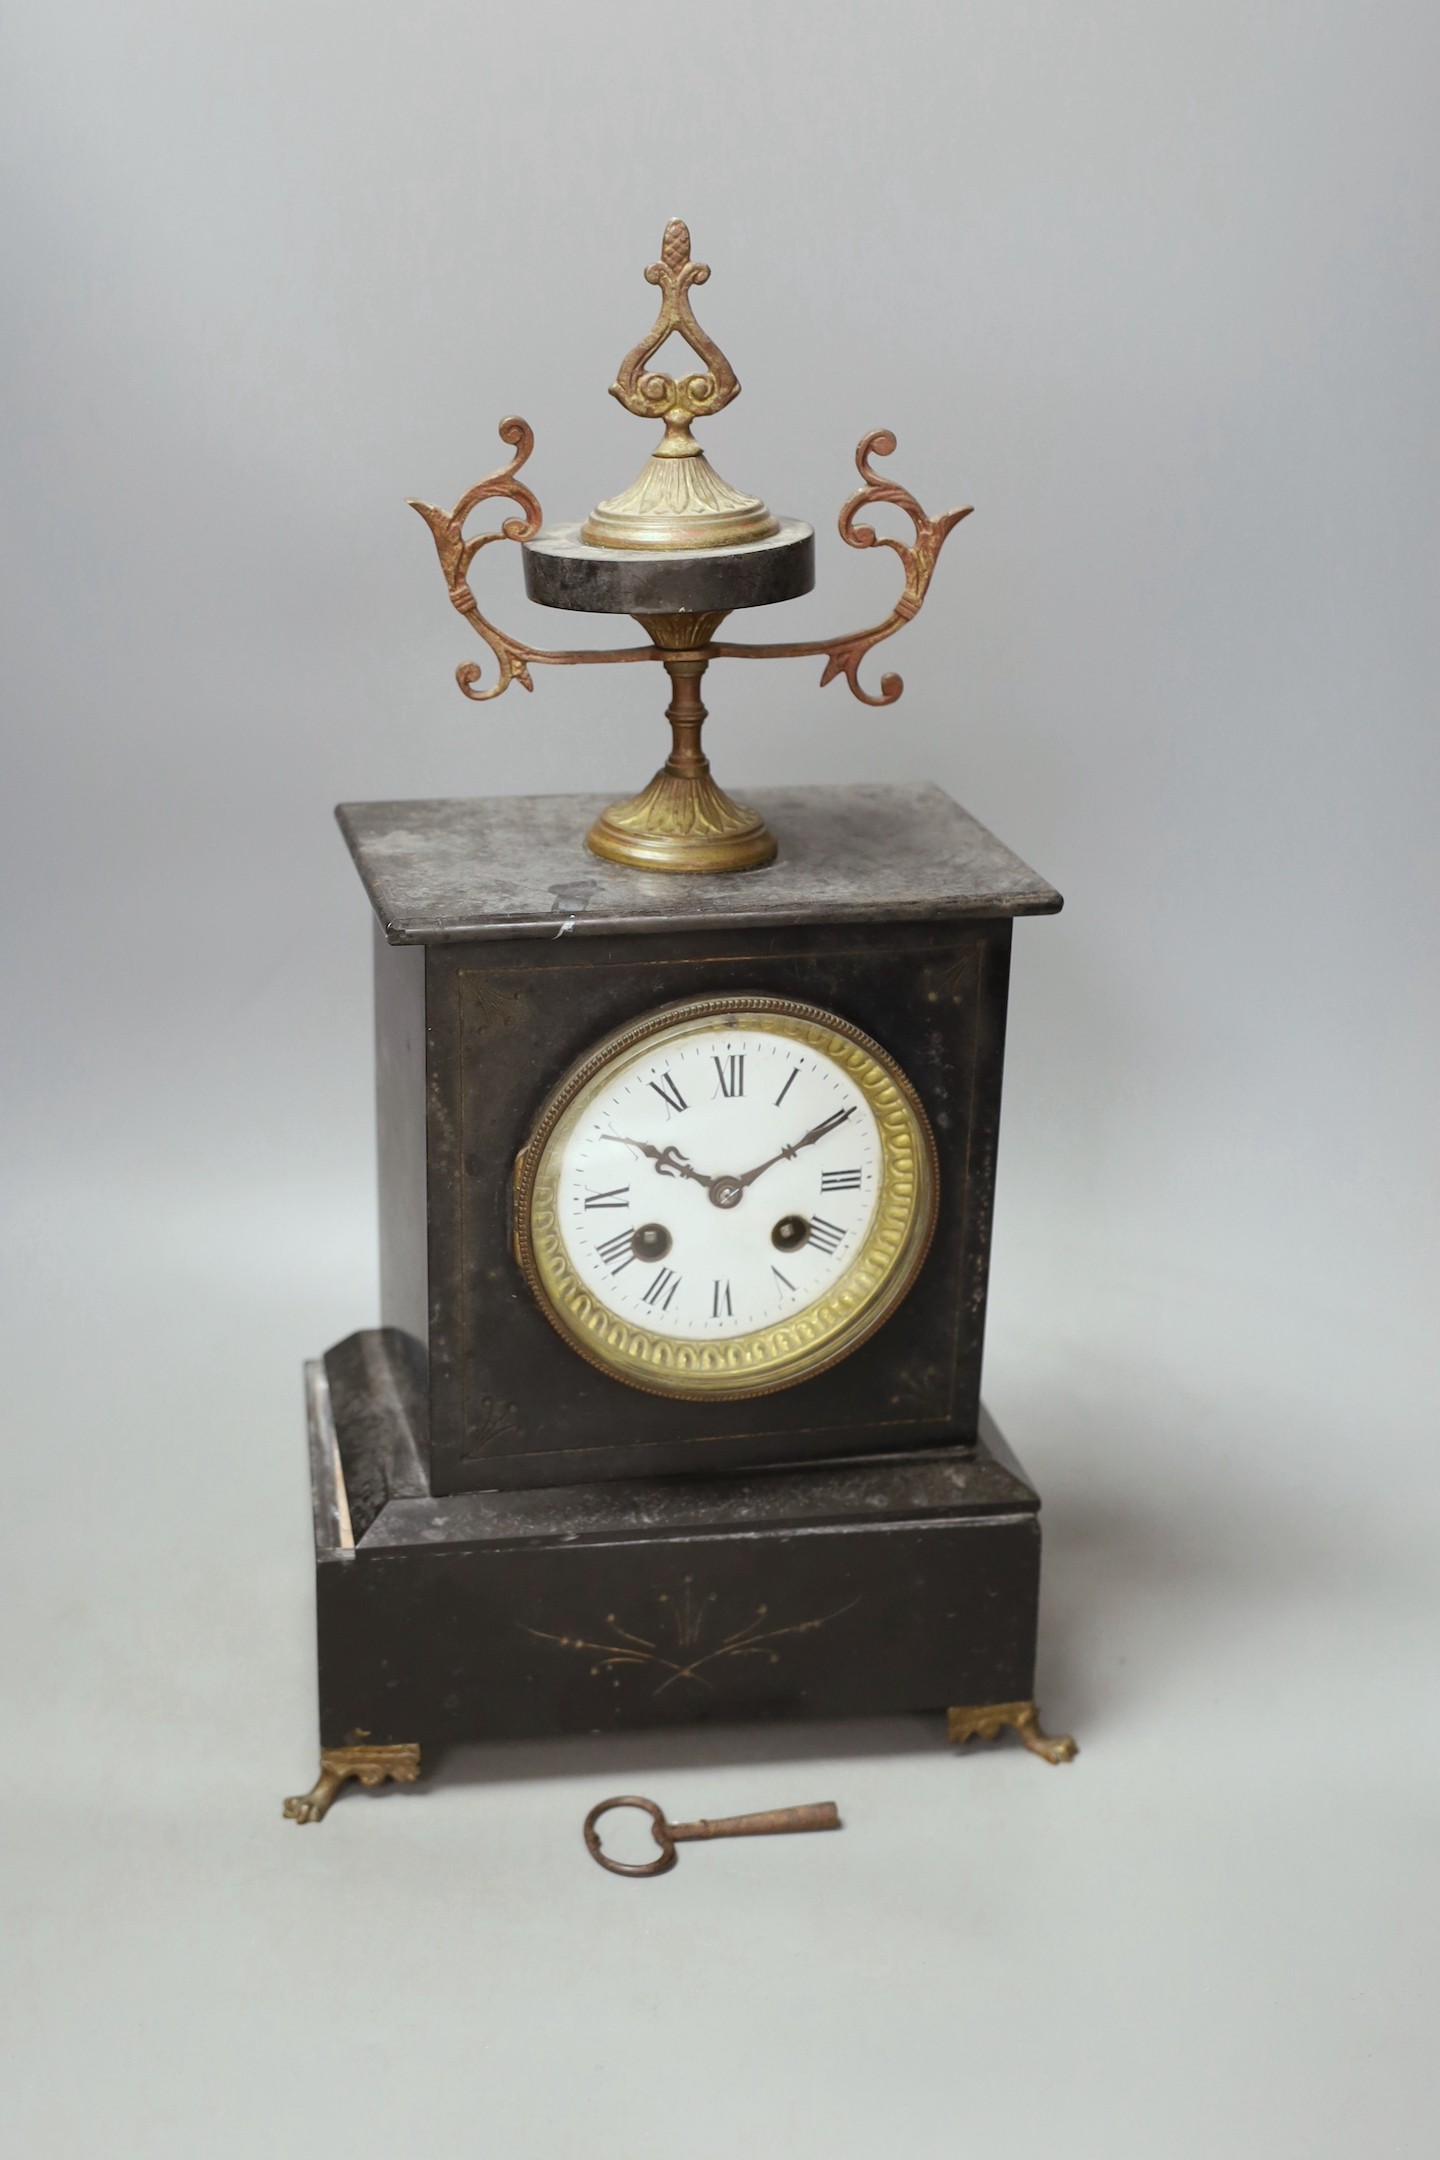 A Victorian black slate mantel clock - 41.5cm tall